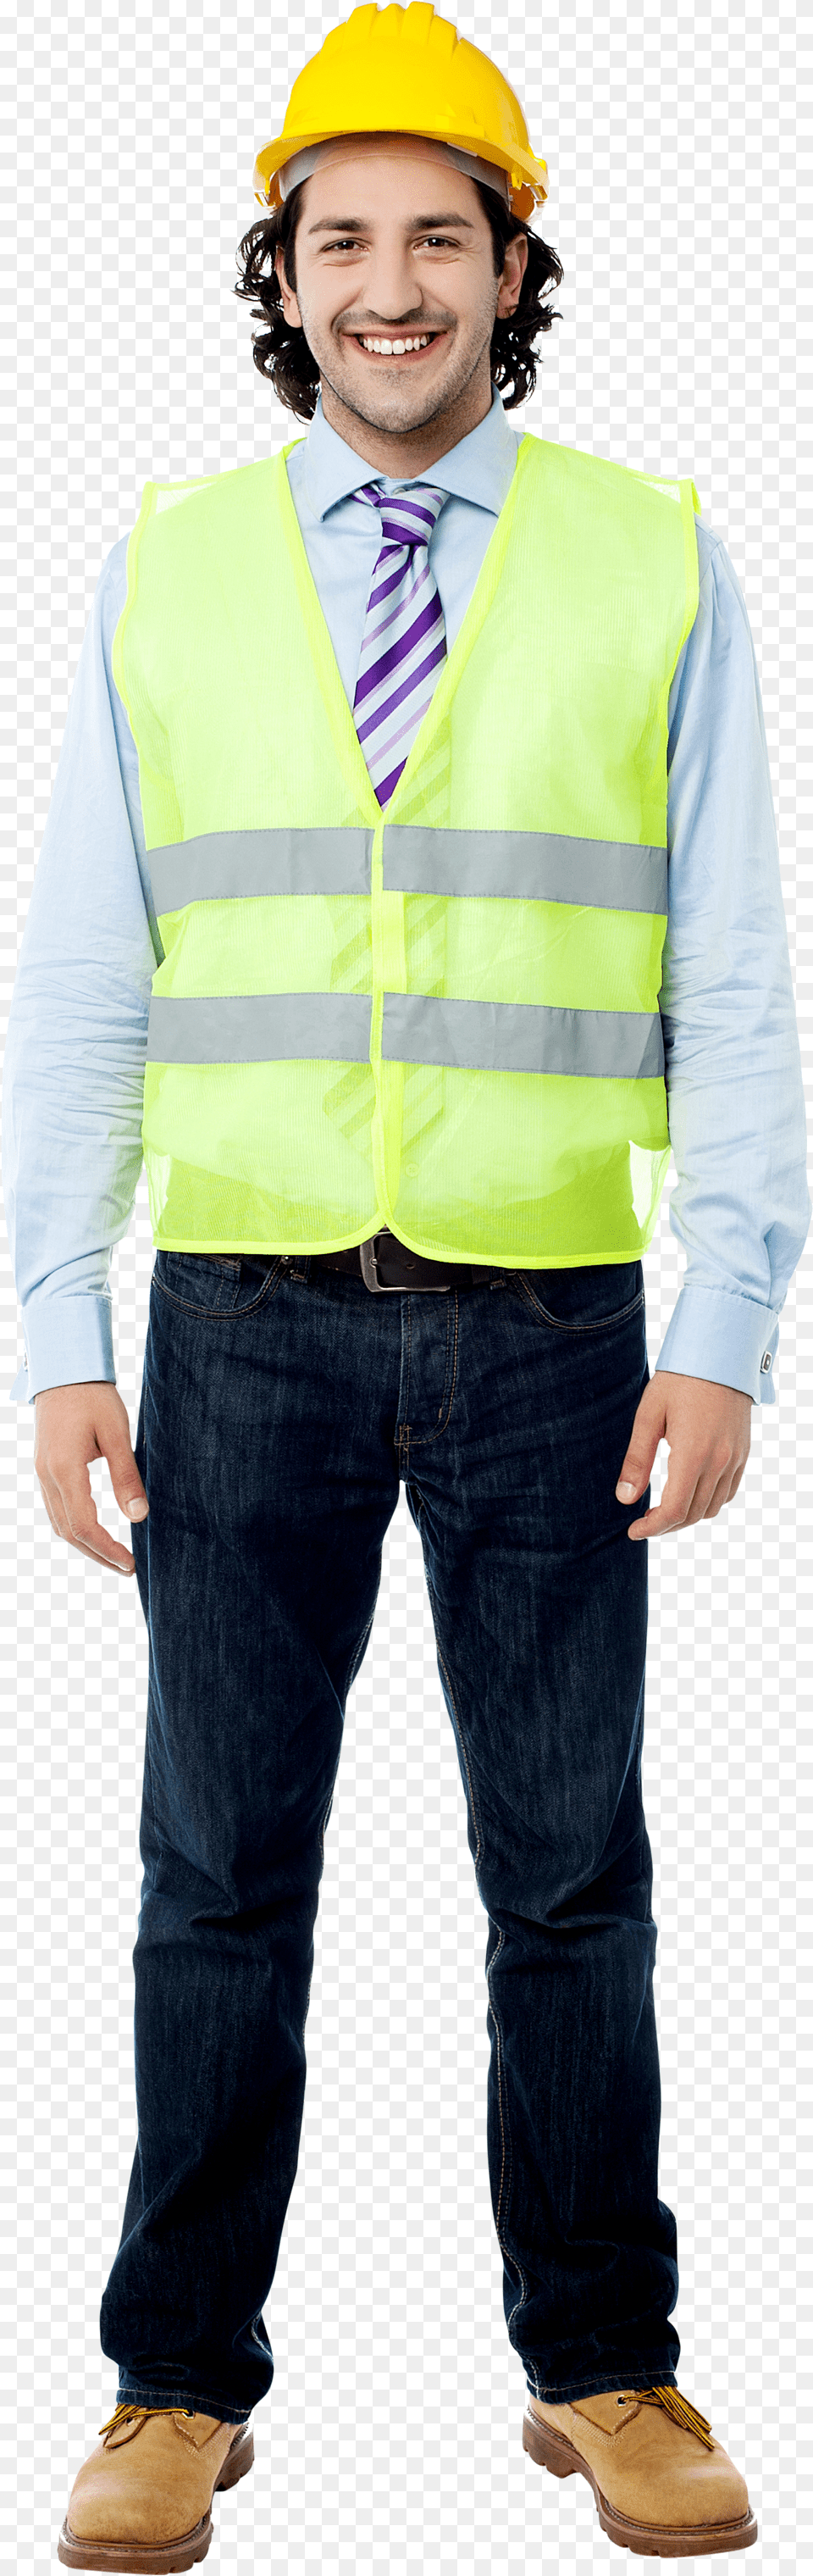 Engineer Image Civil Engineering Civil Engineer Costume Free Transparent Png